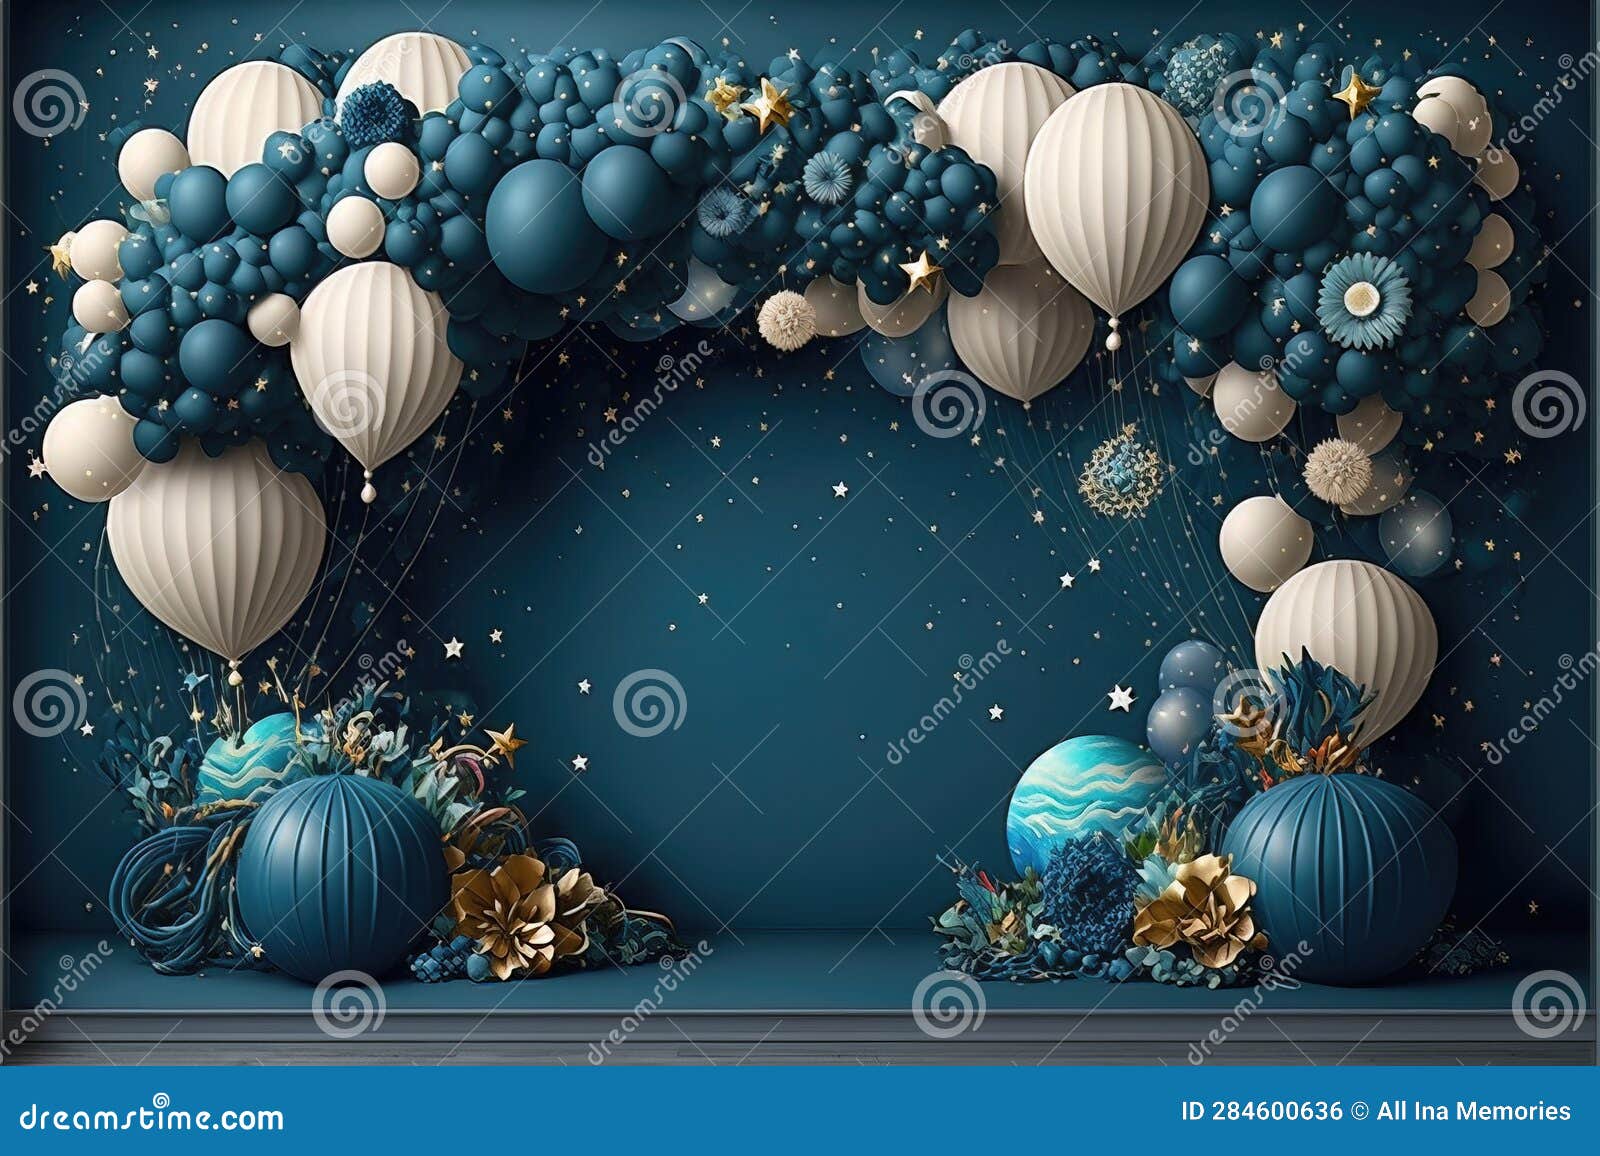 a mesmerizing spiral blue ballons garland galaxy, aniversary, smash cake fantasy backdrop